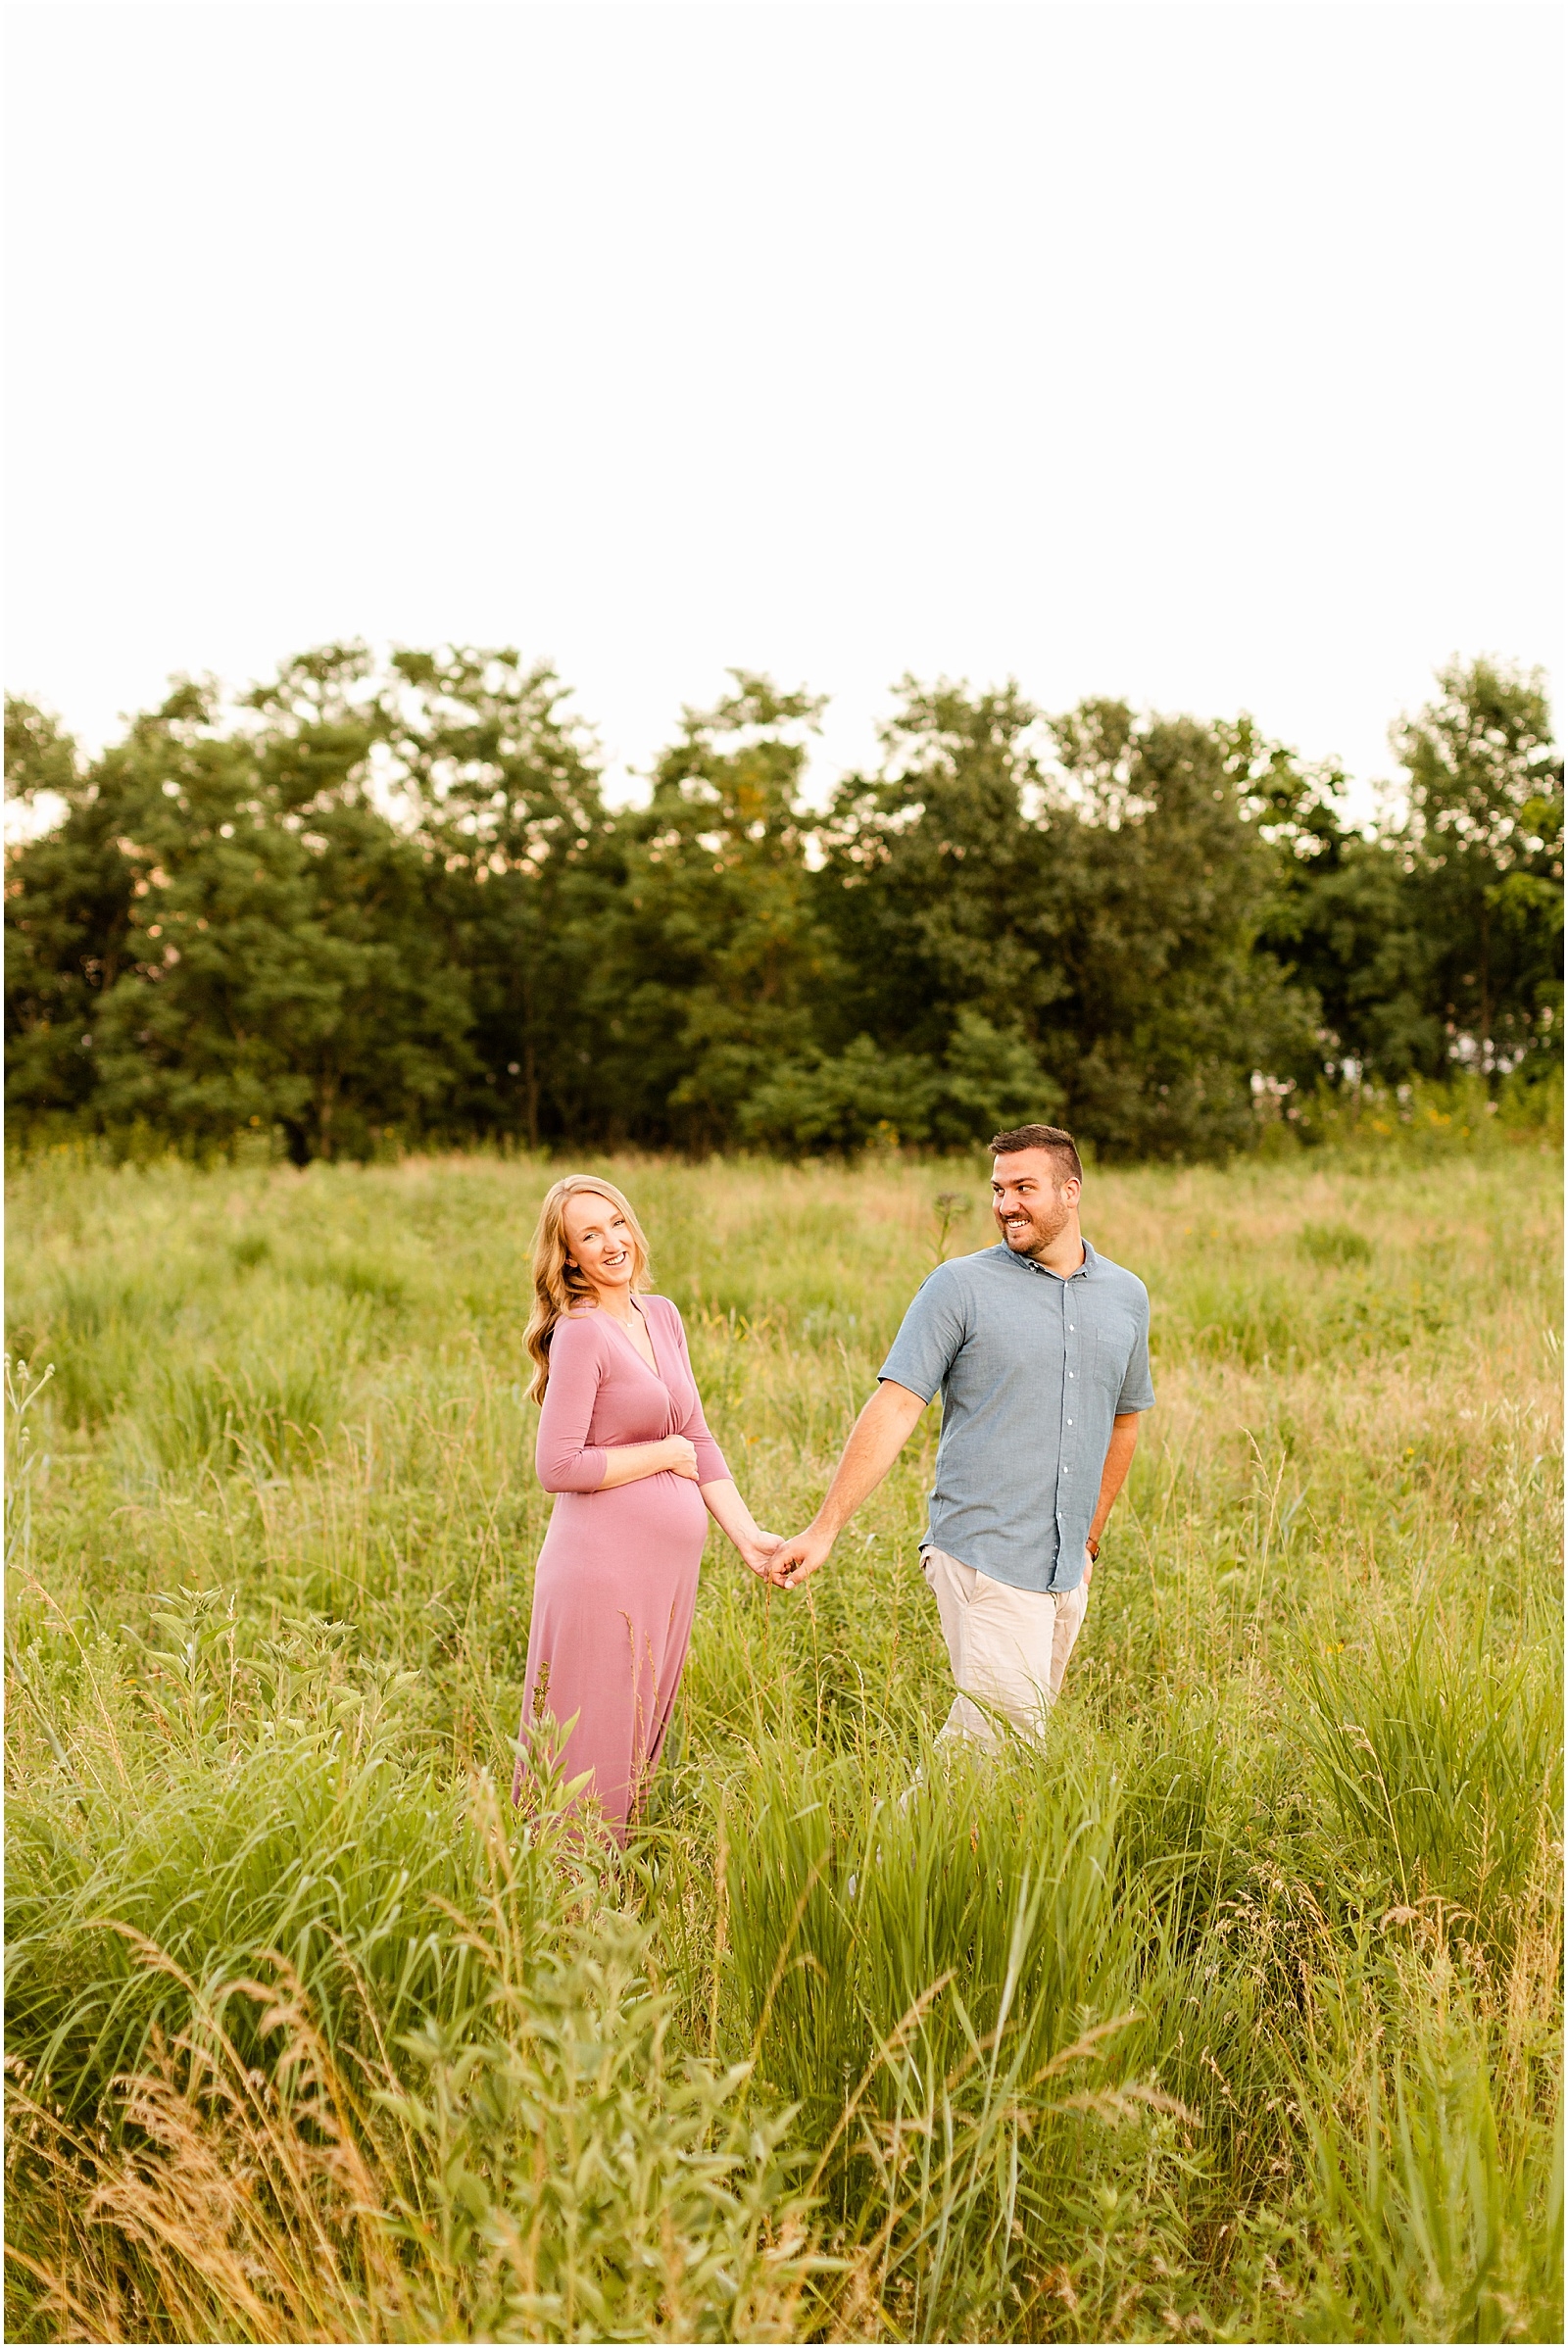 Ellen and Jake | Maternity Session Bret and Brandie | Evansville Photographers | @bretandbrandie-0026.jpg